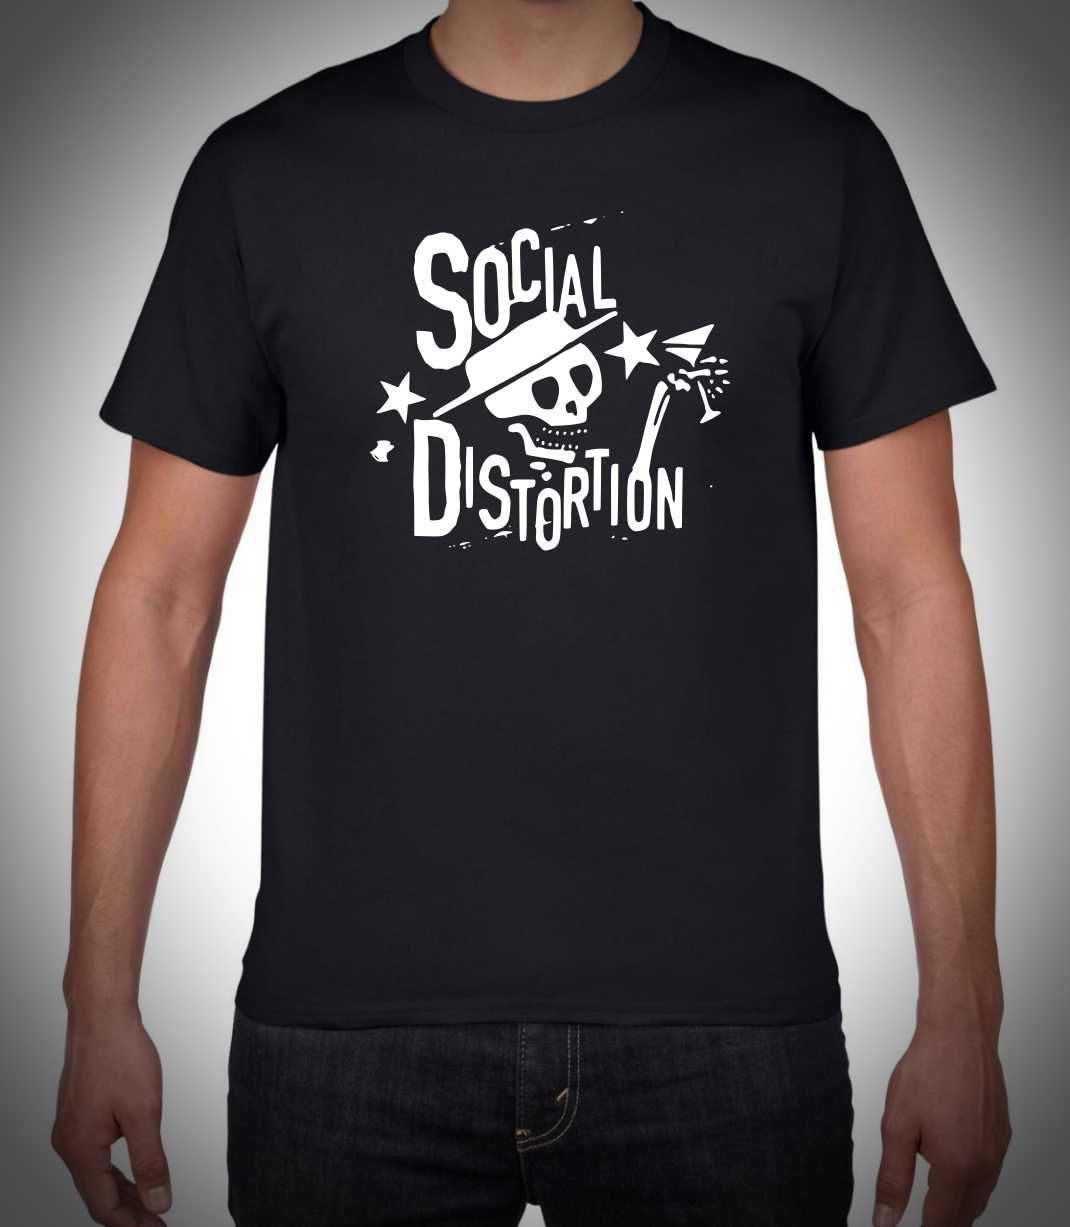 Bad Religion / Social Distortion/ Dropkick Murphys - T-shirt - Nova